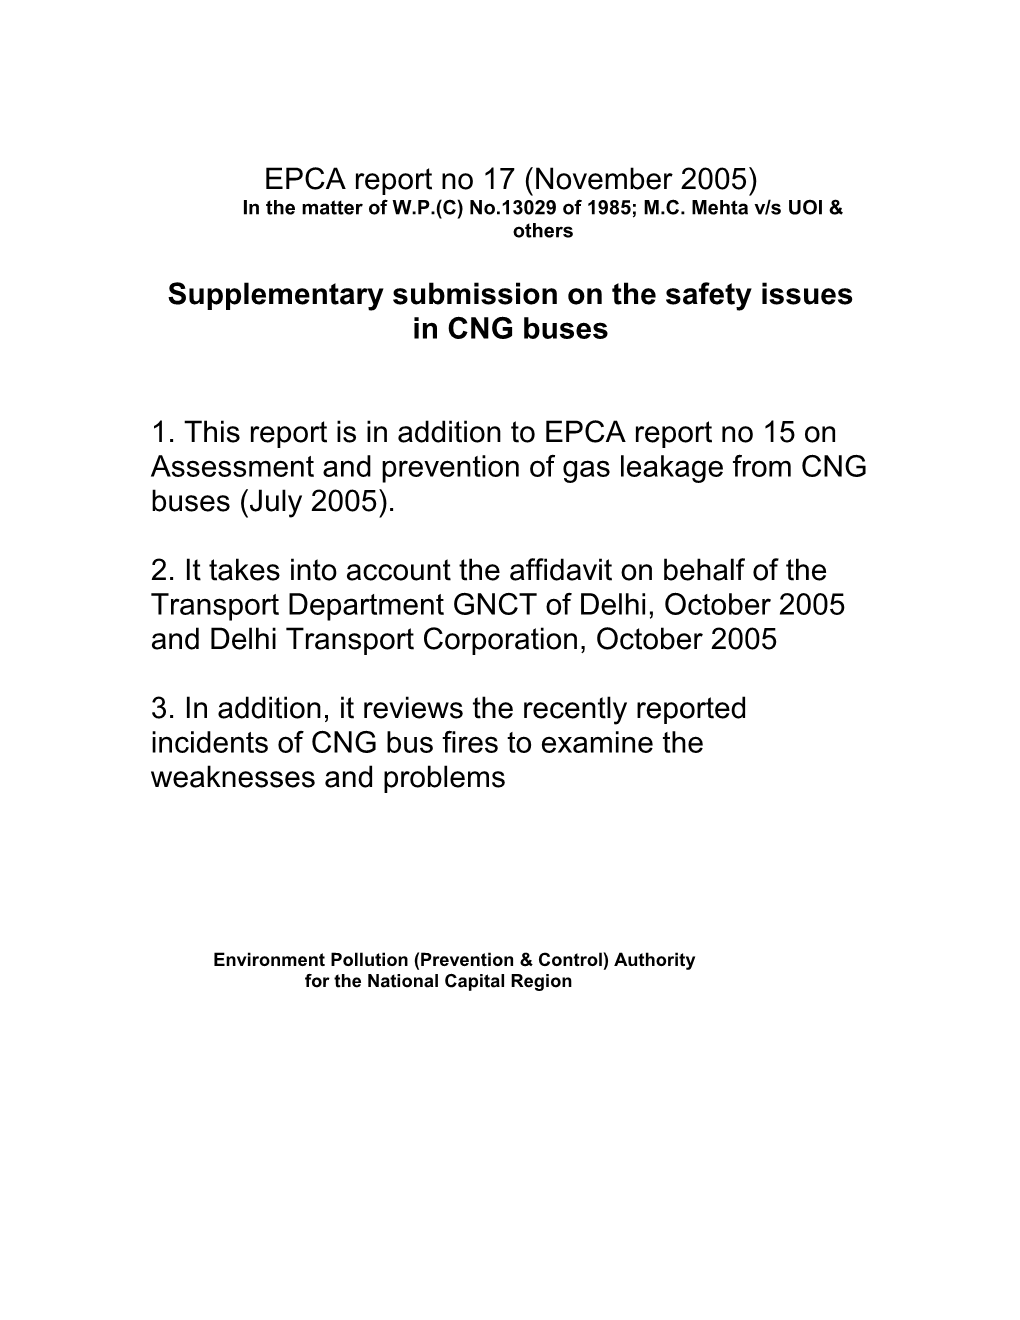 EPCA Report No 17 (November 2005)